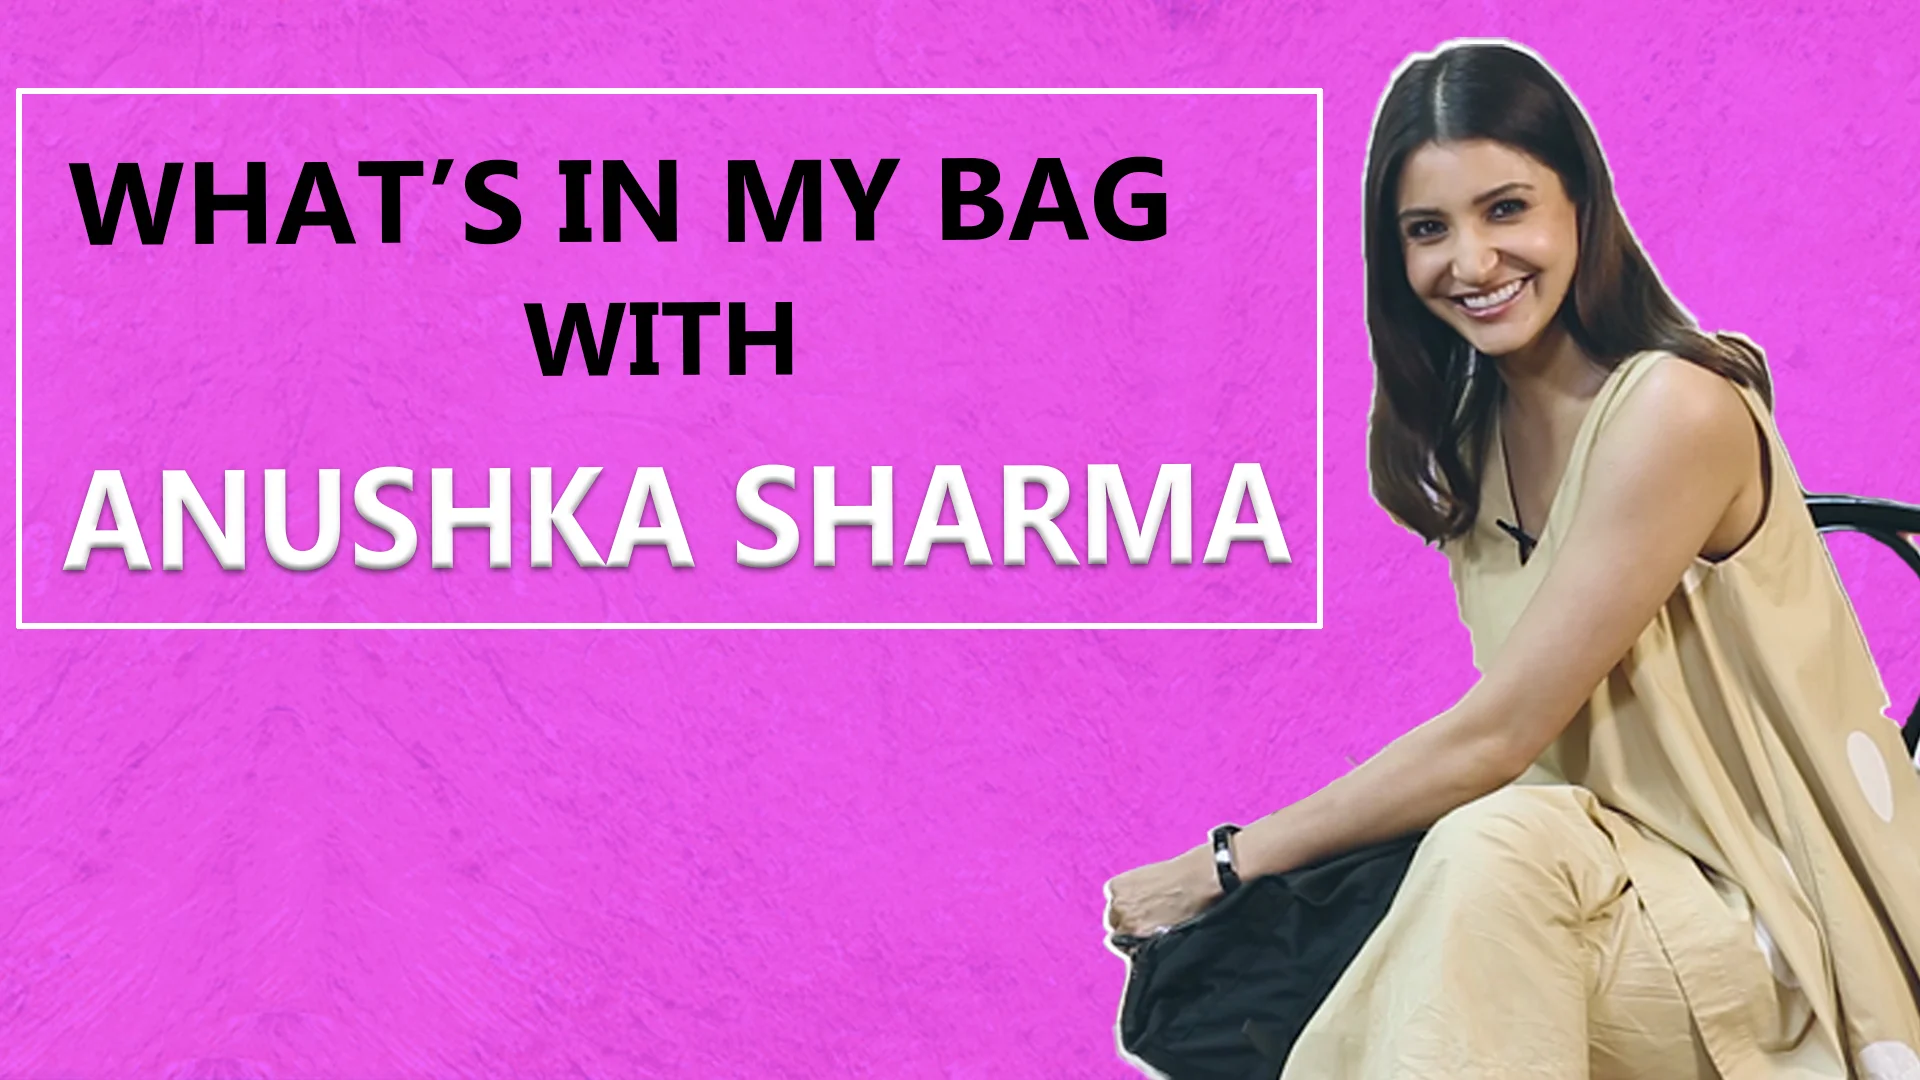 anushka sharma bag advertisement